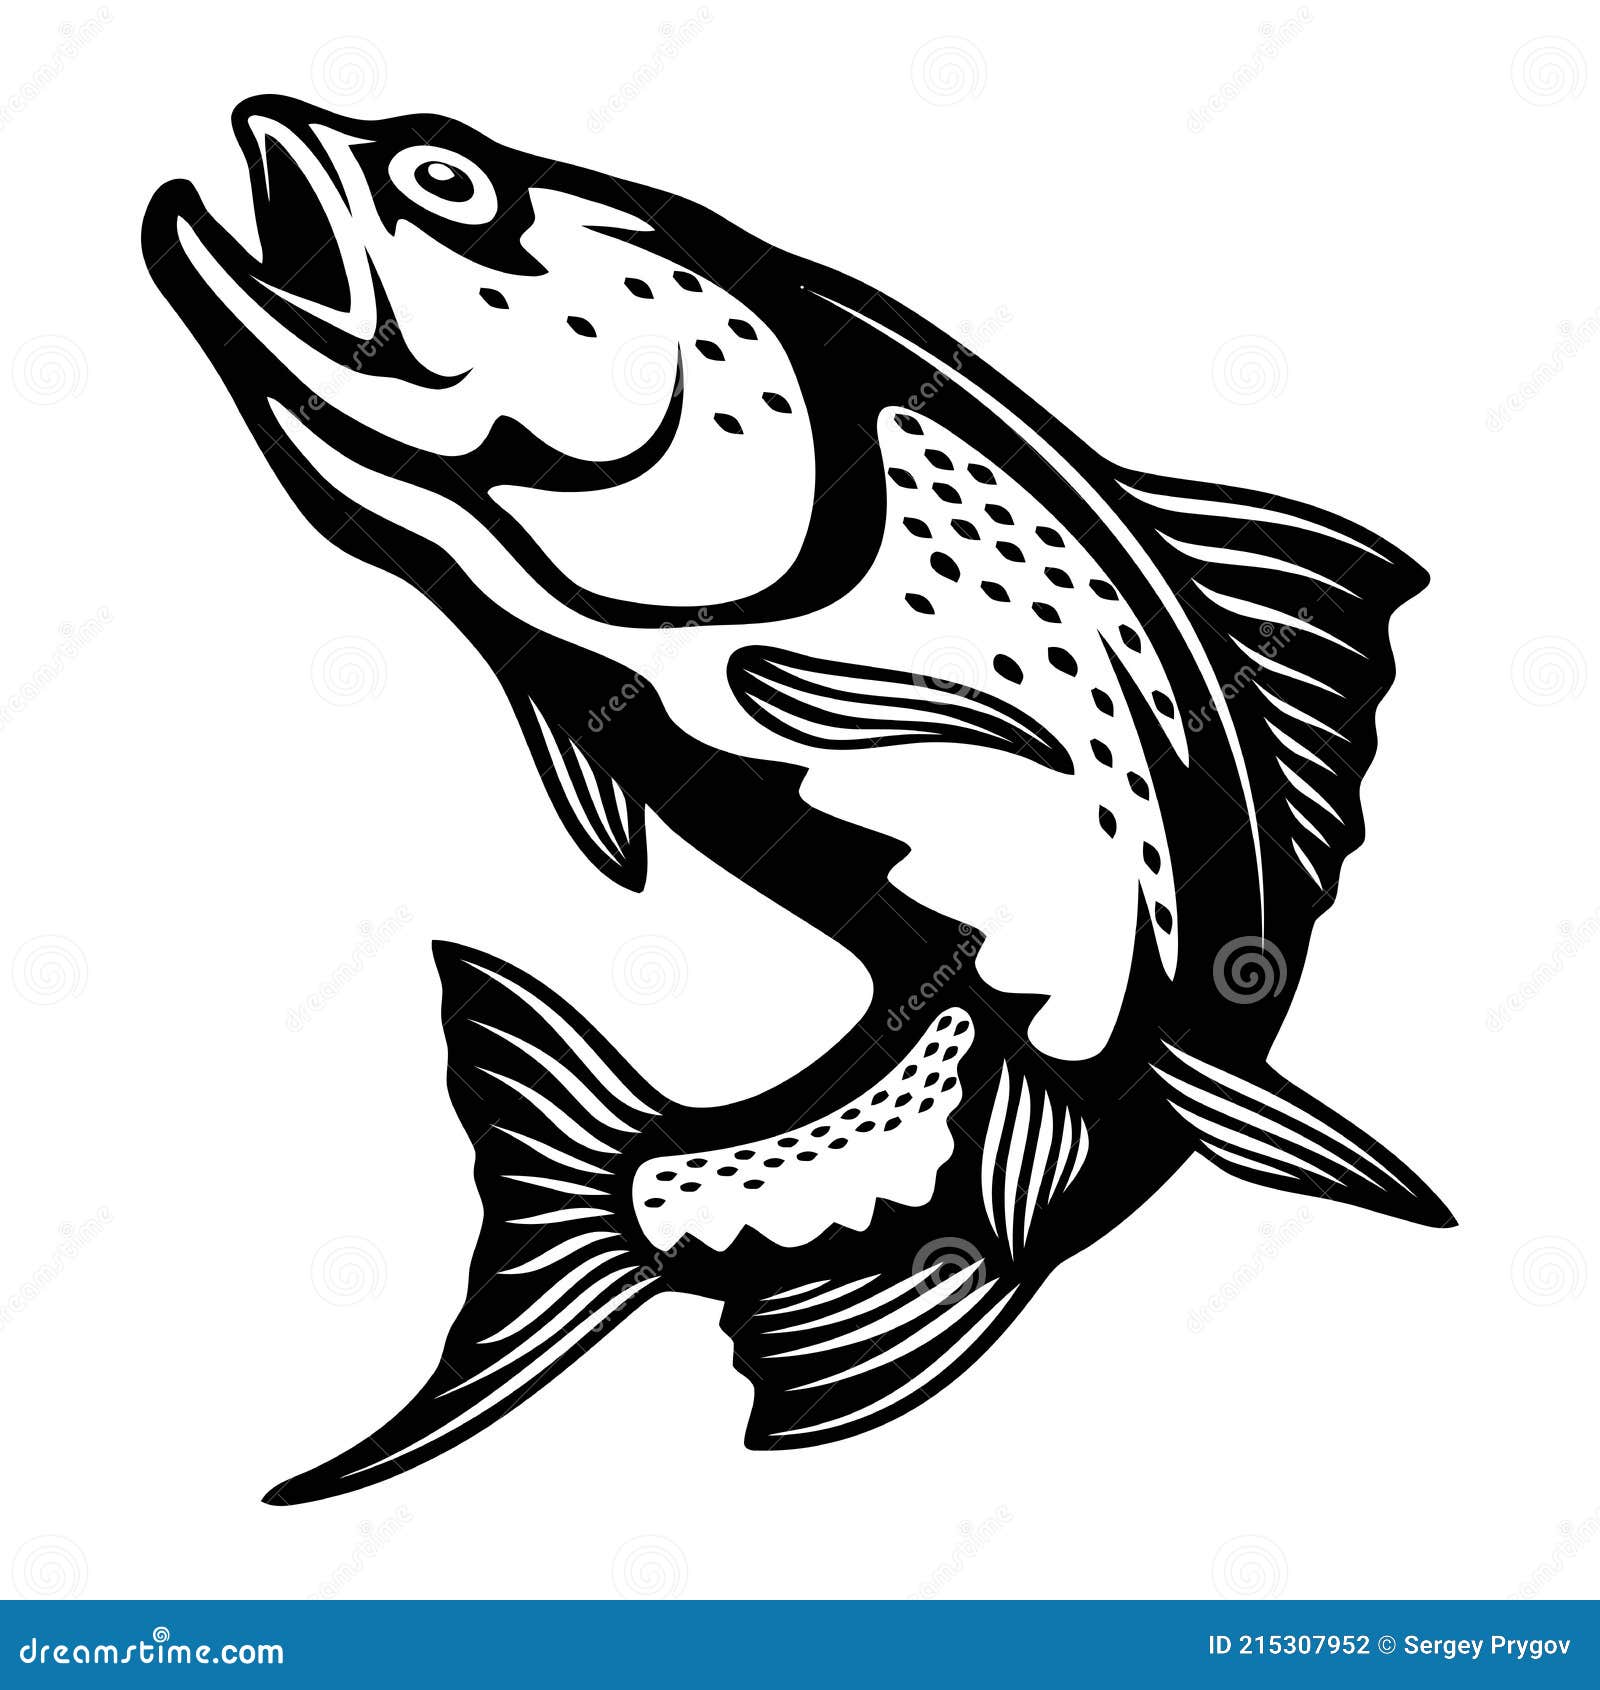 60 Tuna Fish Tattoo Ideas For Men - Thunnini Designs